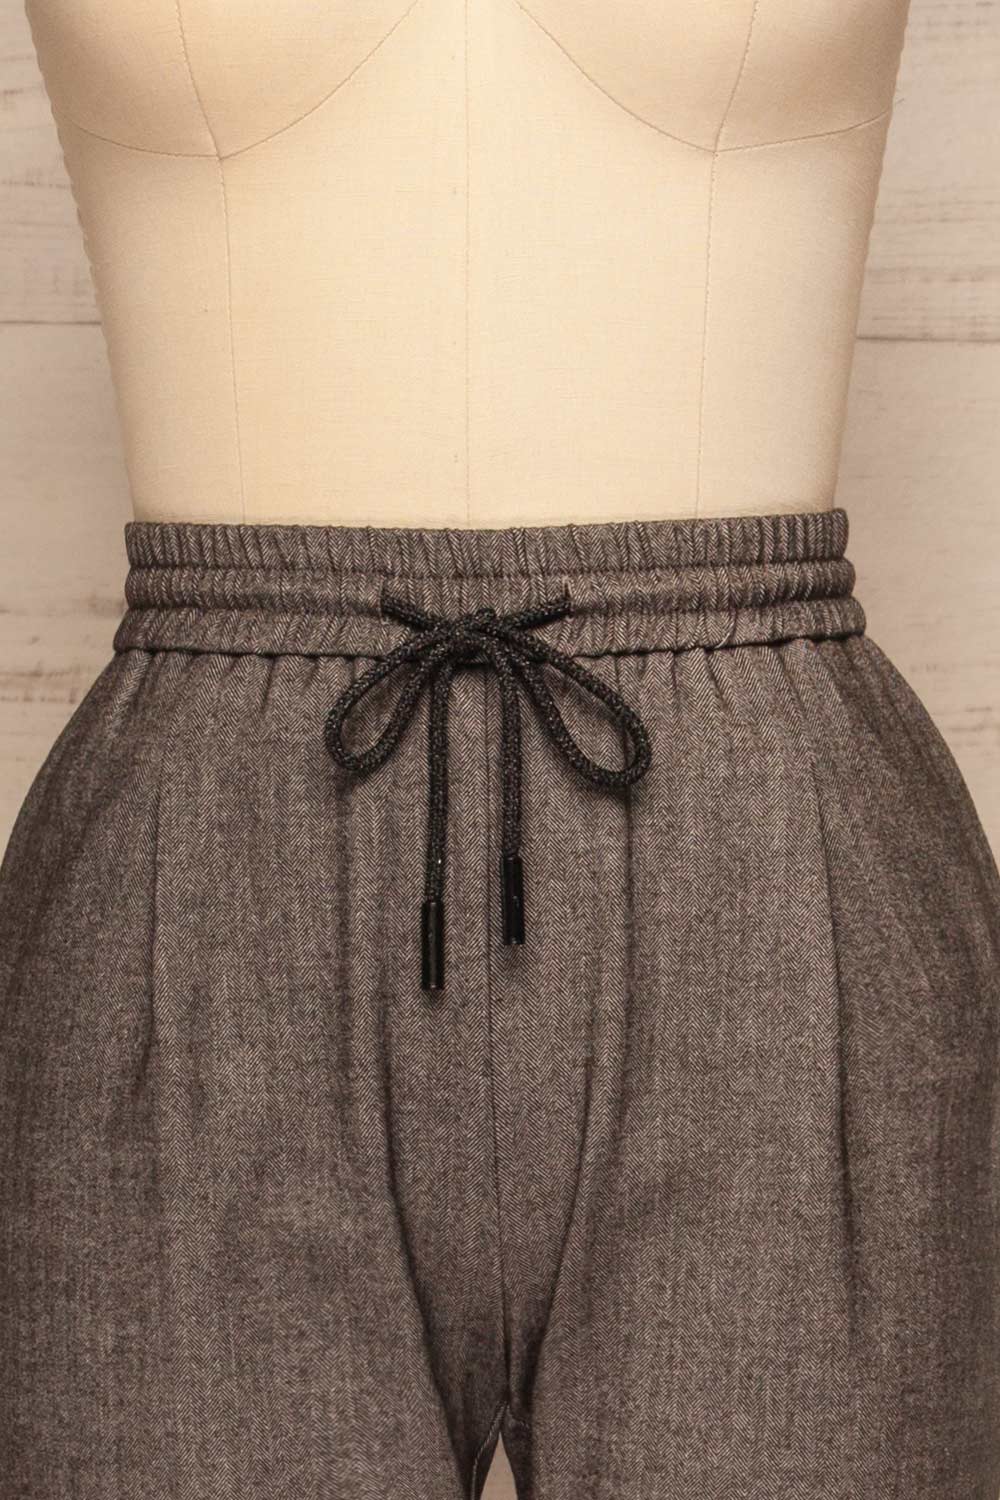 Kerames Cropped Grey Drawstring Pants | La petite garçonne front close u^